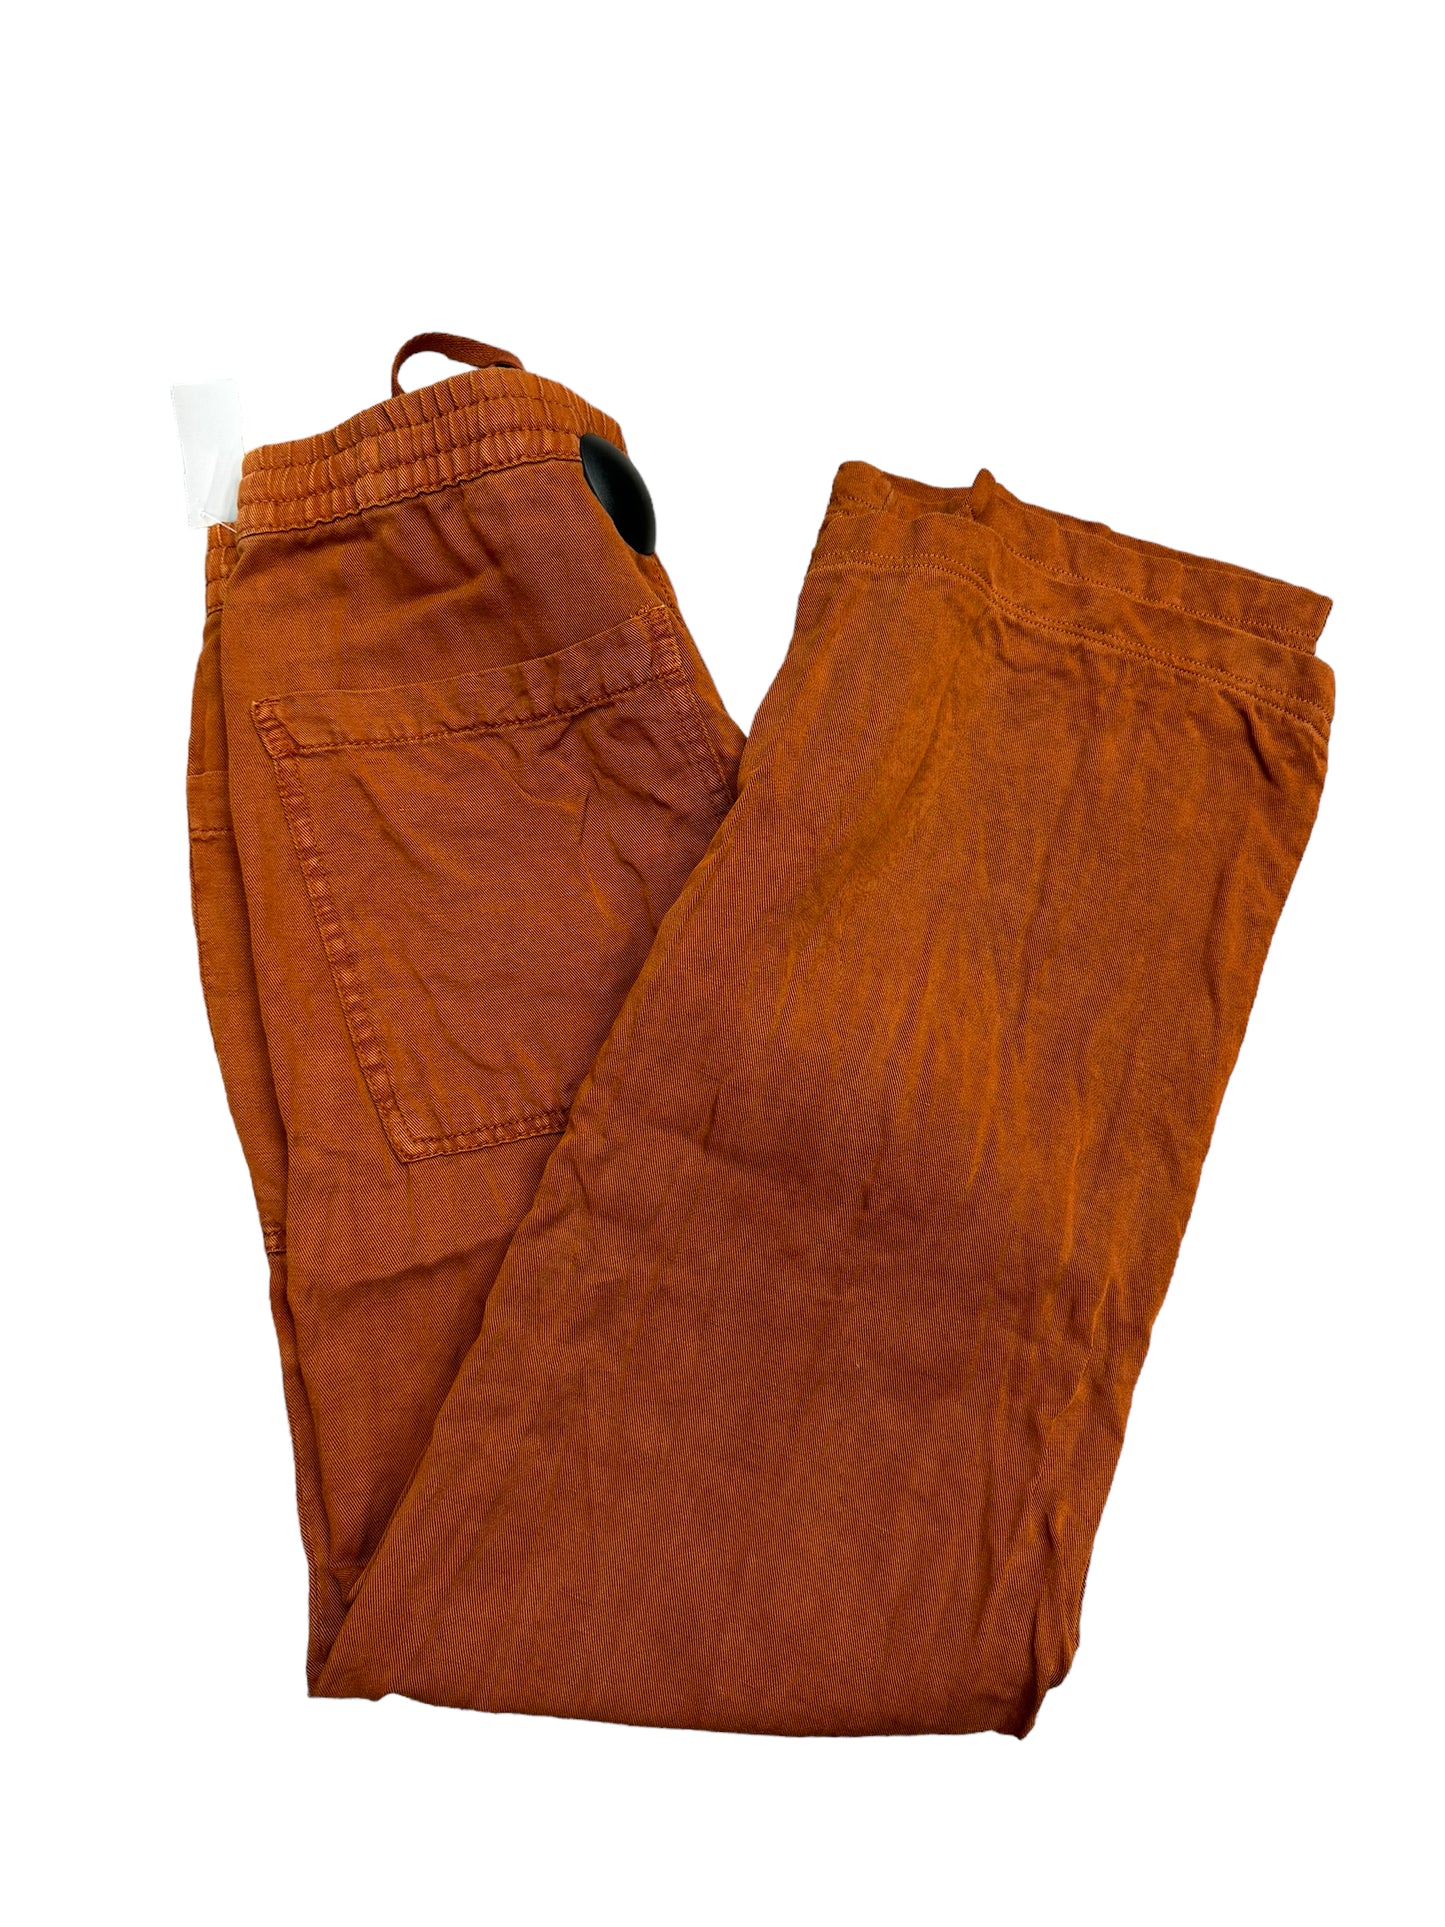 Pants Linen By Zara  Size: 8